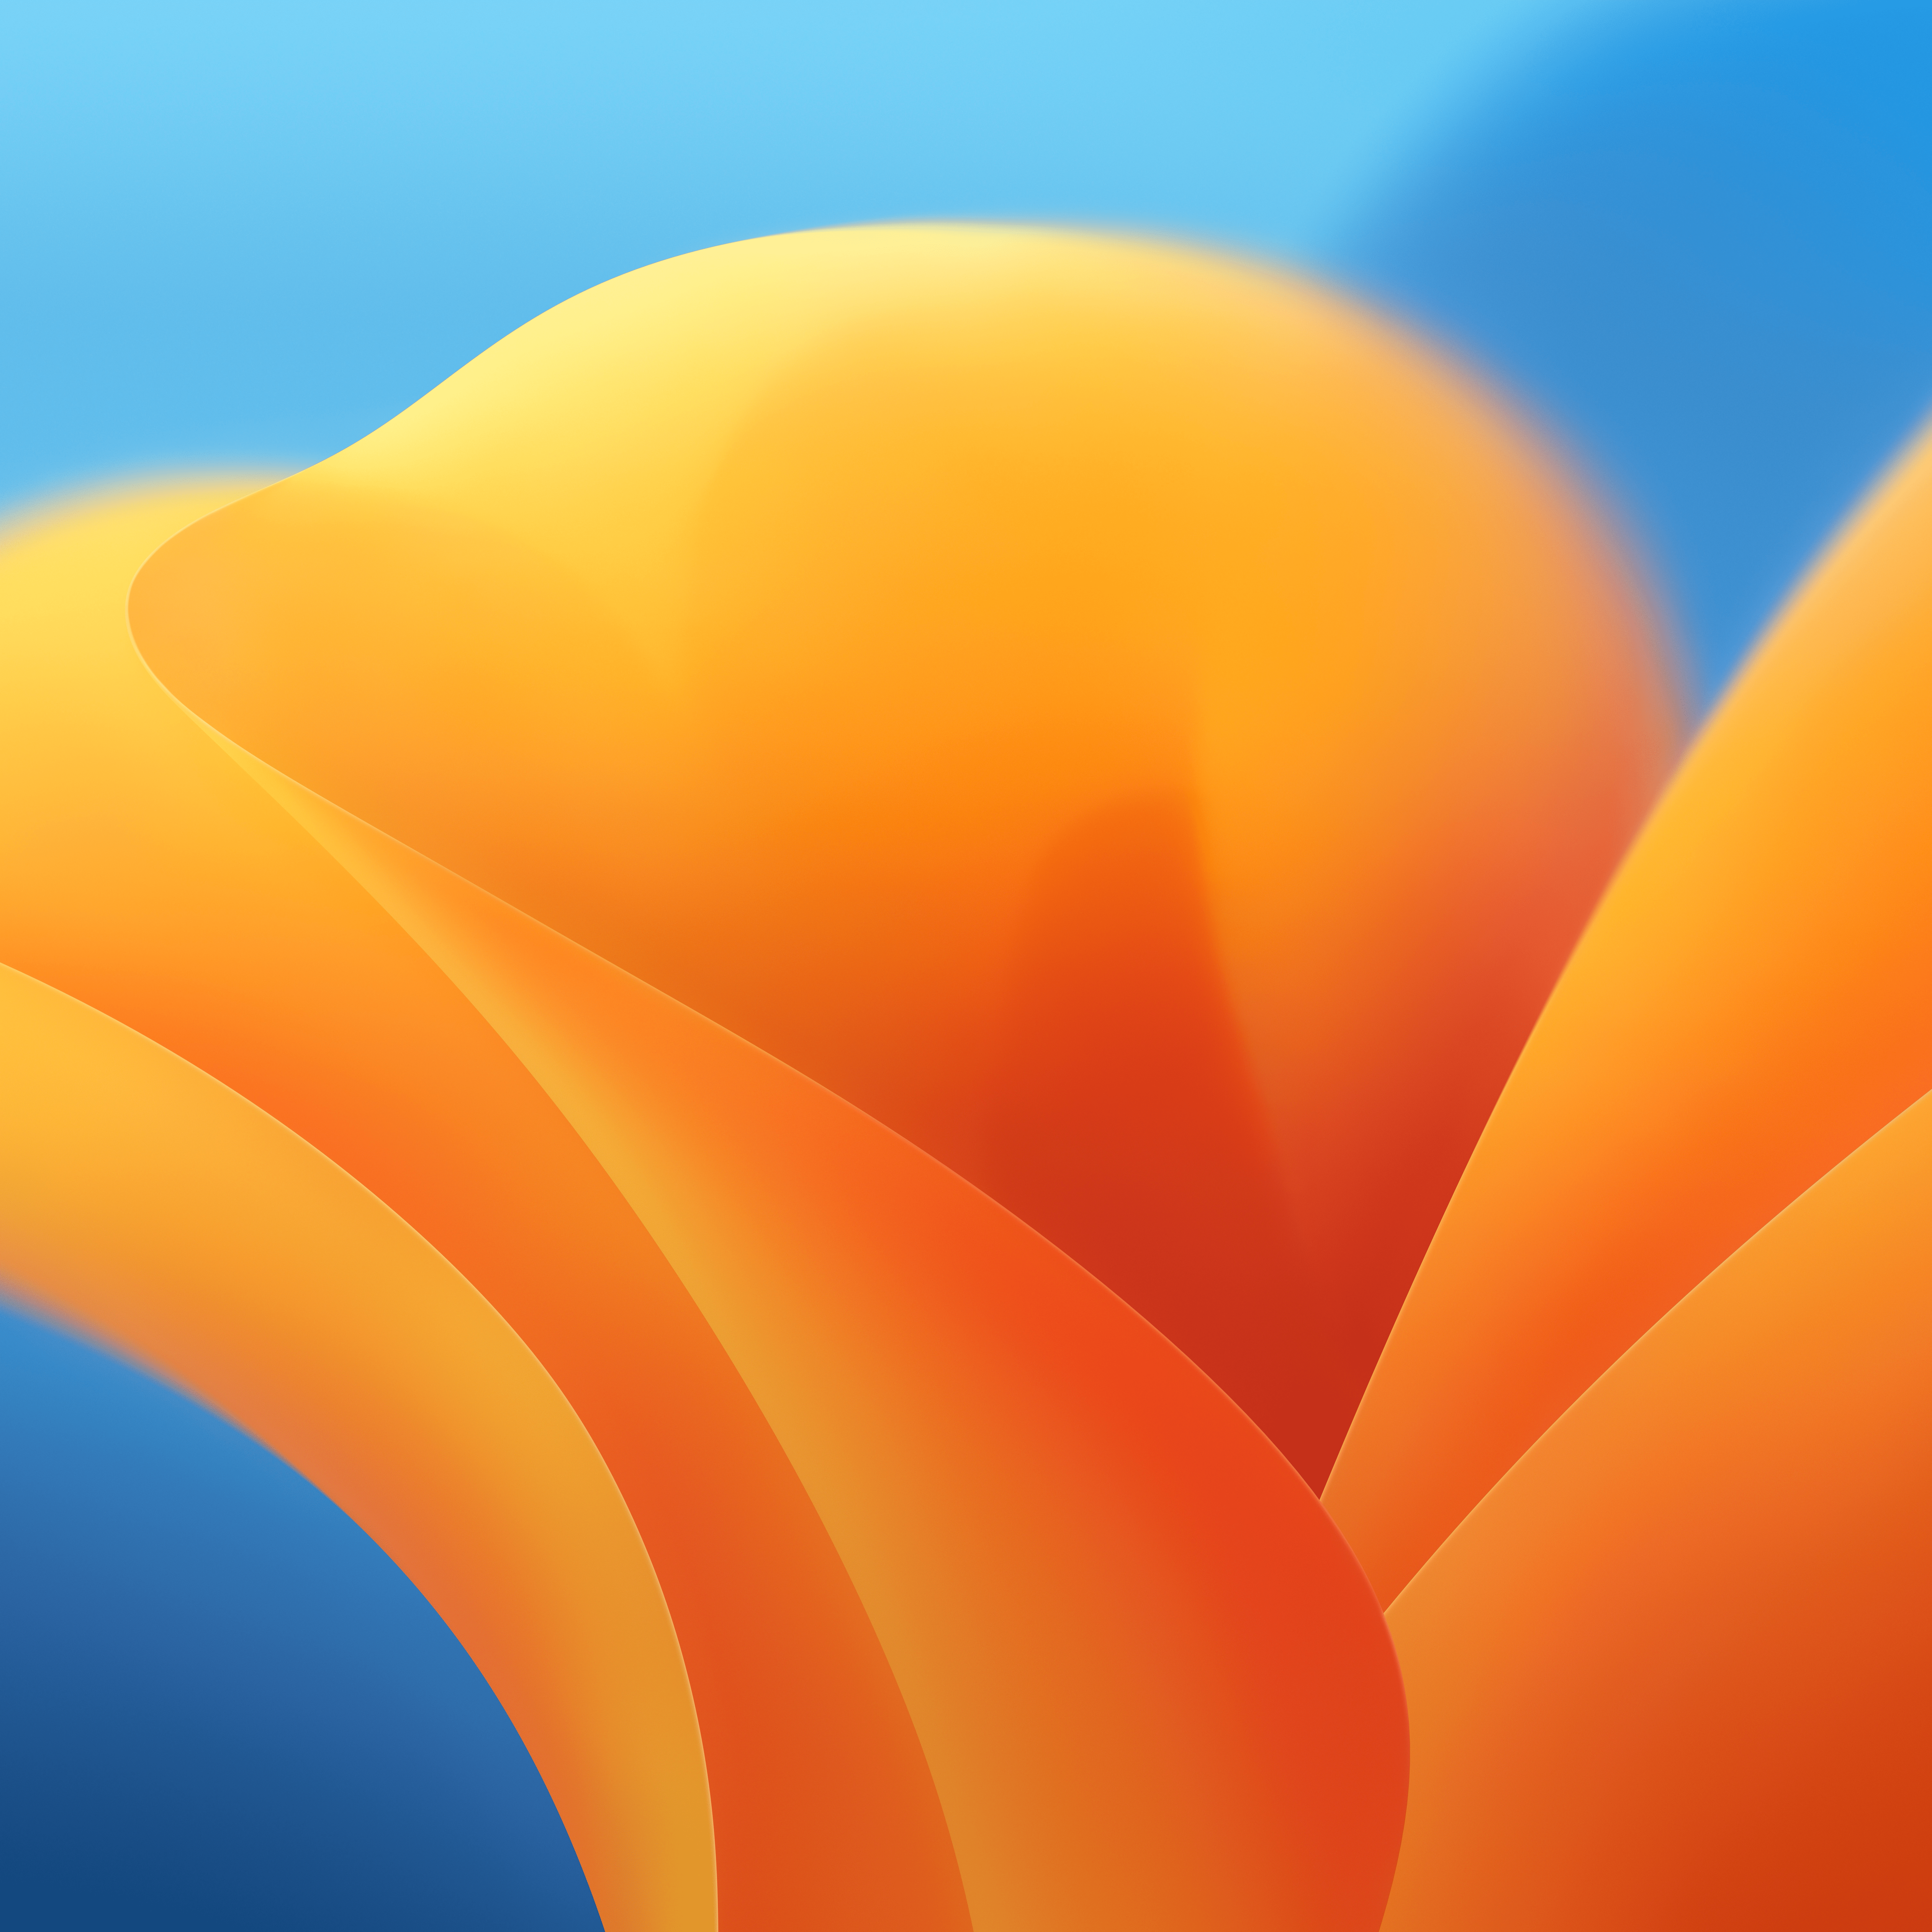 General 6016x6016 orange background flowers blossoms plants light background macOS MacOS Ventura abstract digital art